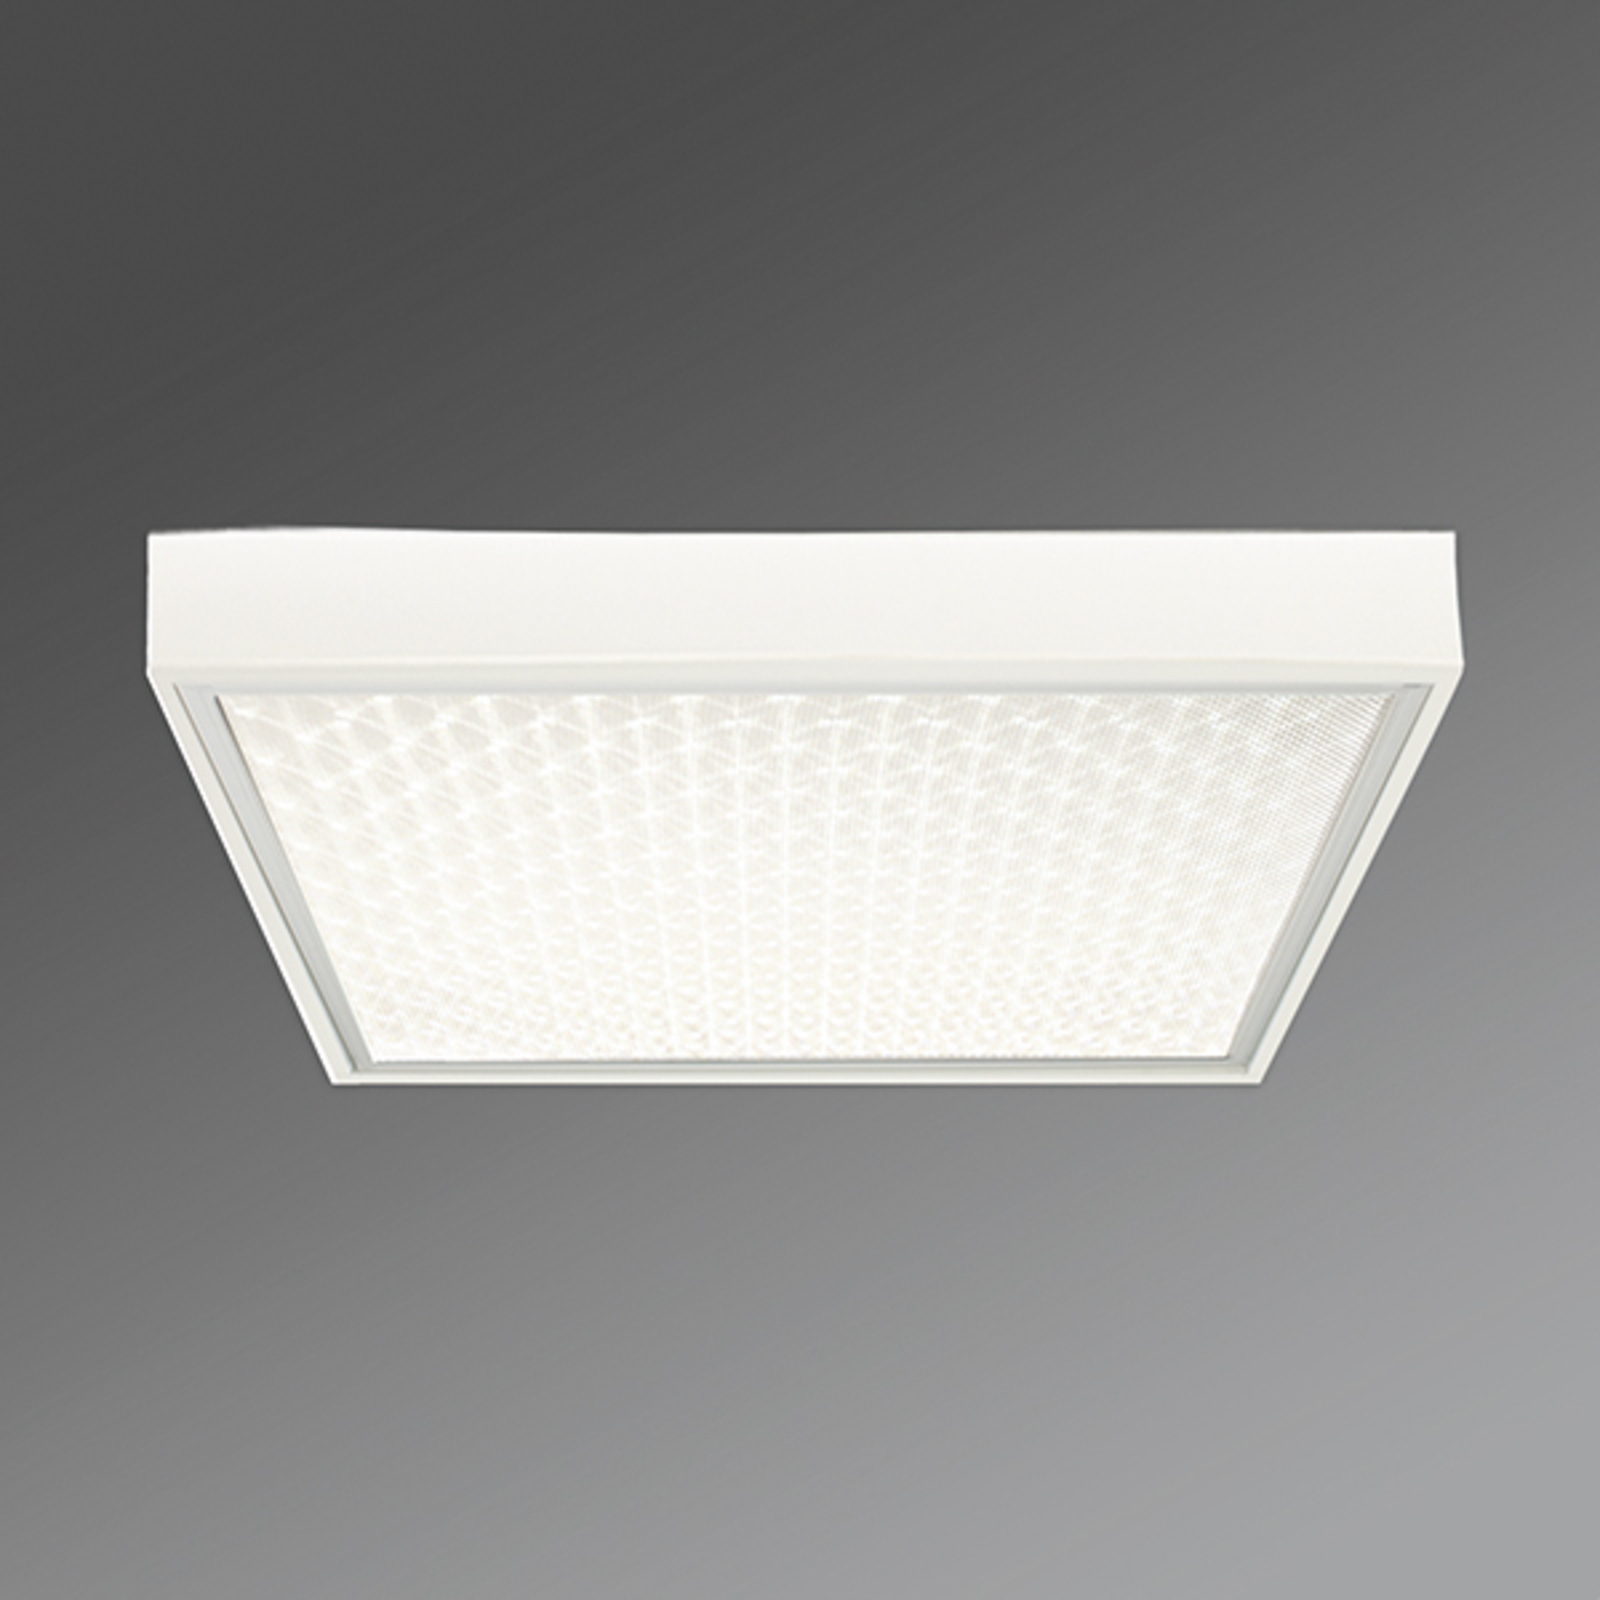 Biurowa lampa sufitowa Protection-PRAMP 660 BAP